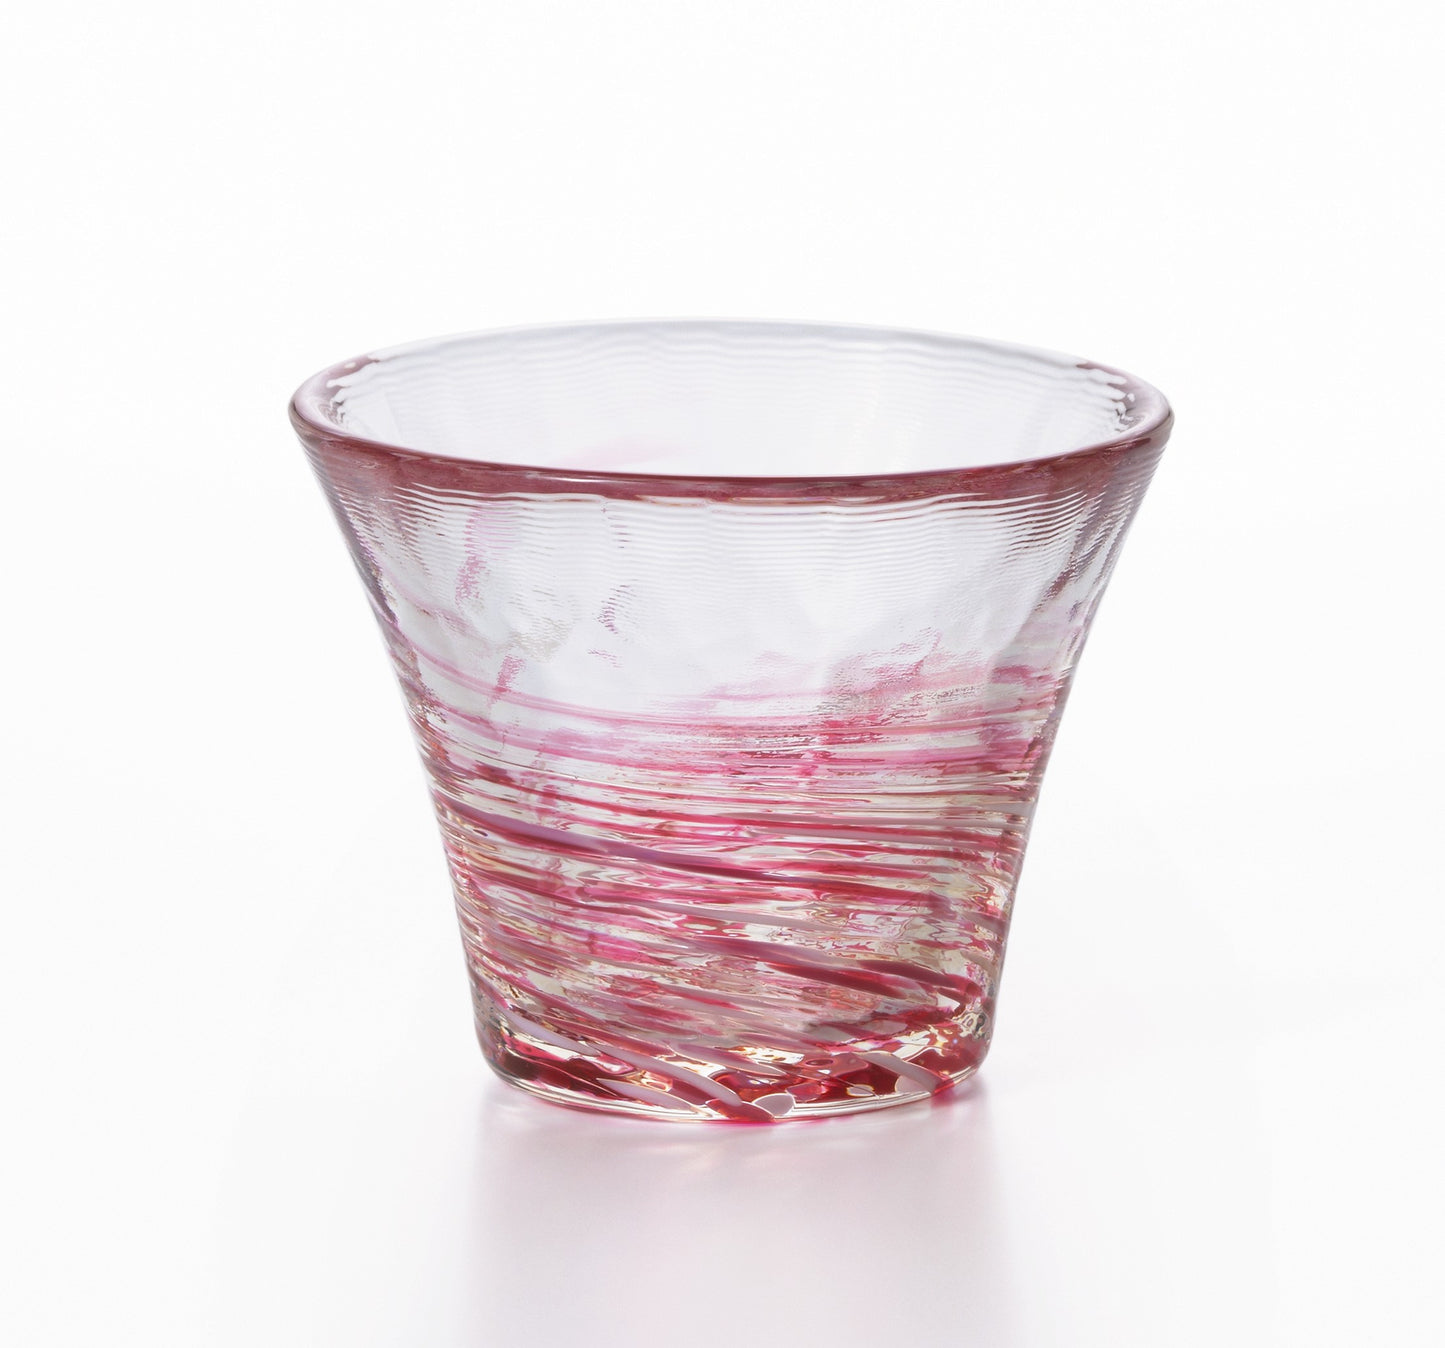 L2211-032 (預訂) 日本製 津輕 びいどろ手作職人清酒杯 (櫻花漫舞) ; Tsugaru Vidro handmade sake cup (Dancing Sakura)